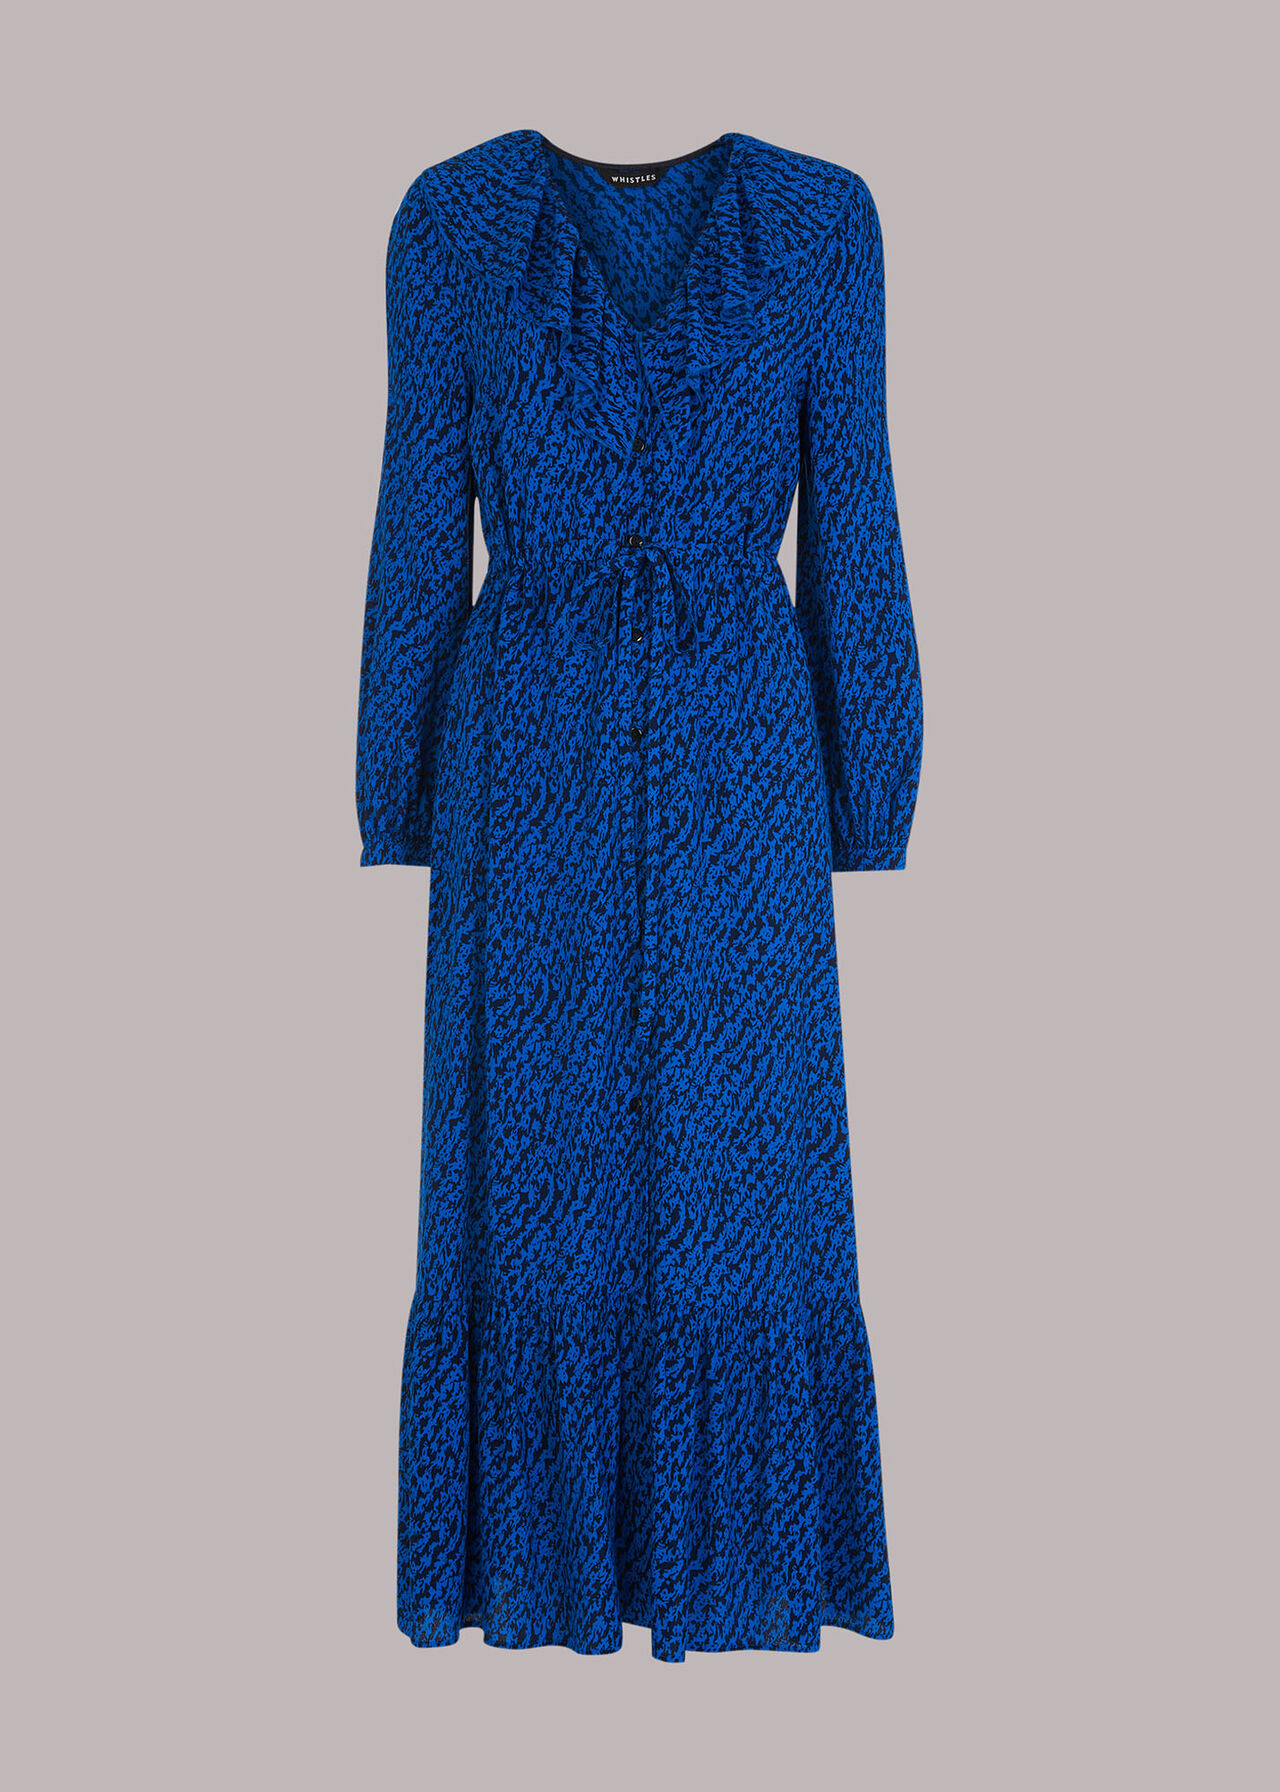 Diagonal Texture Print Dress